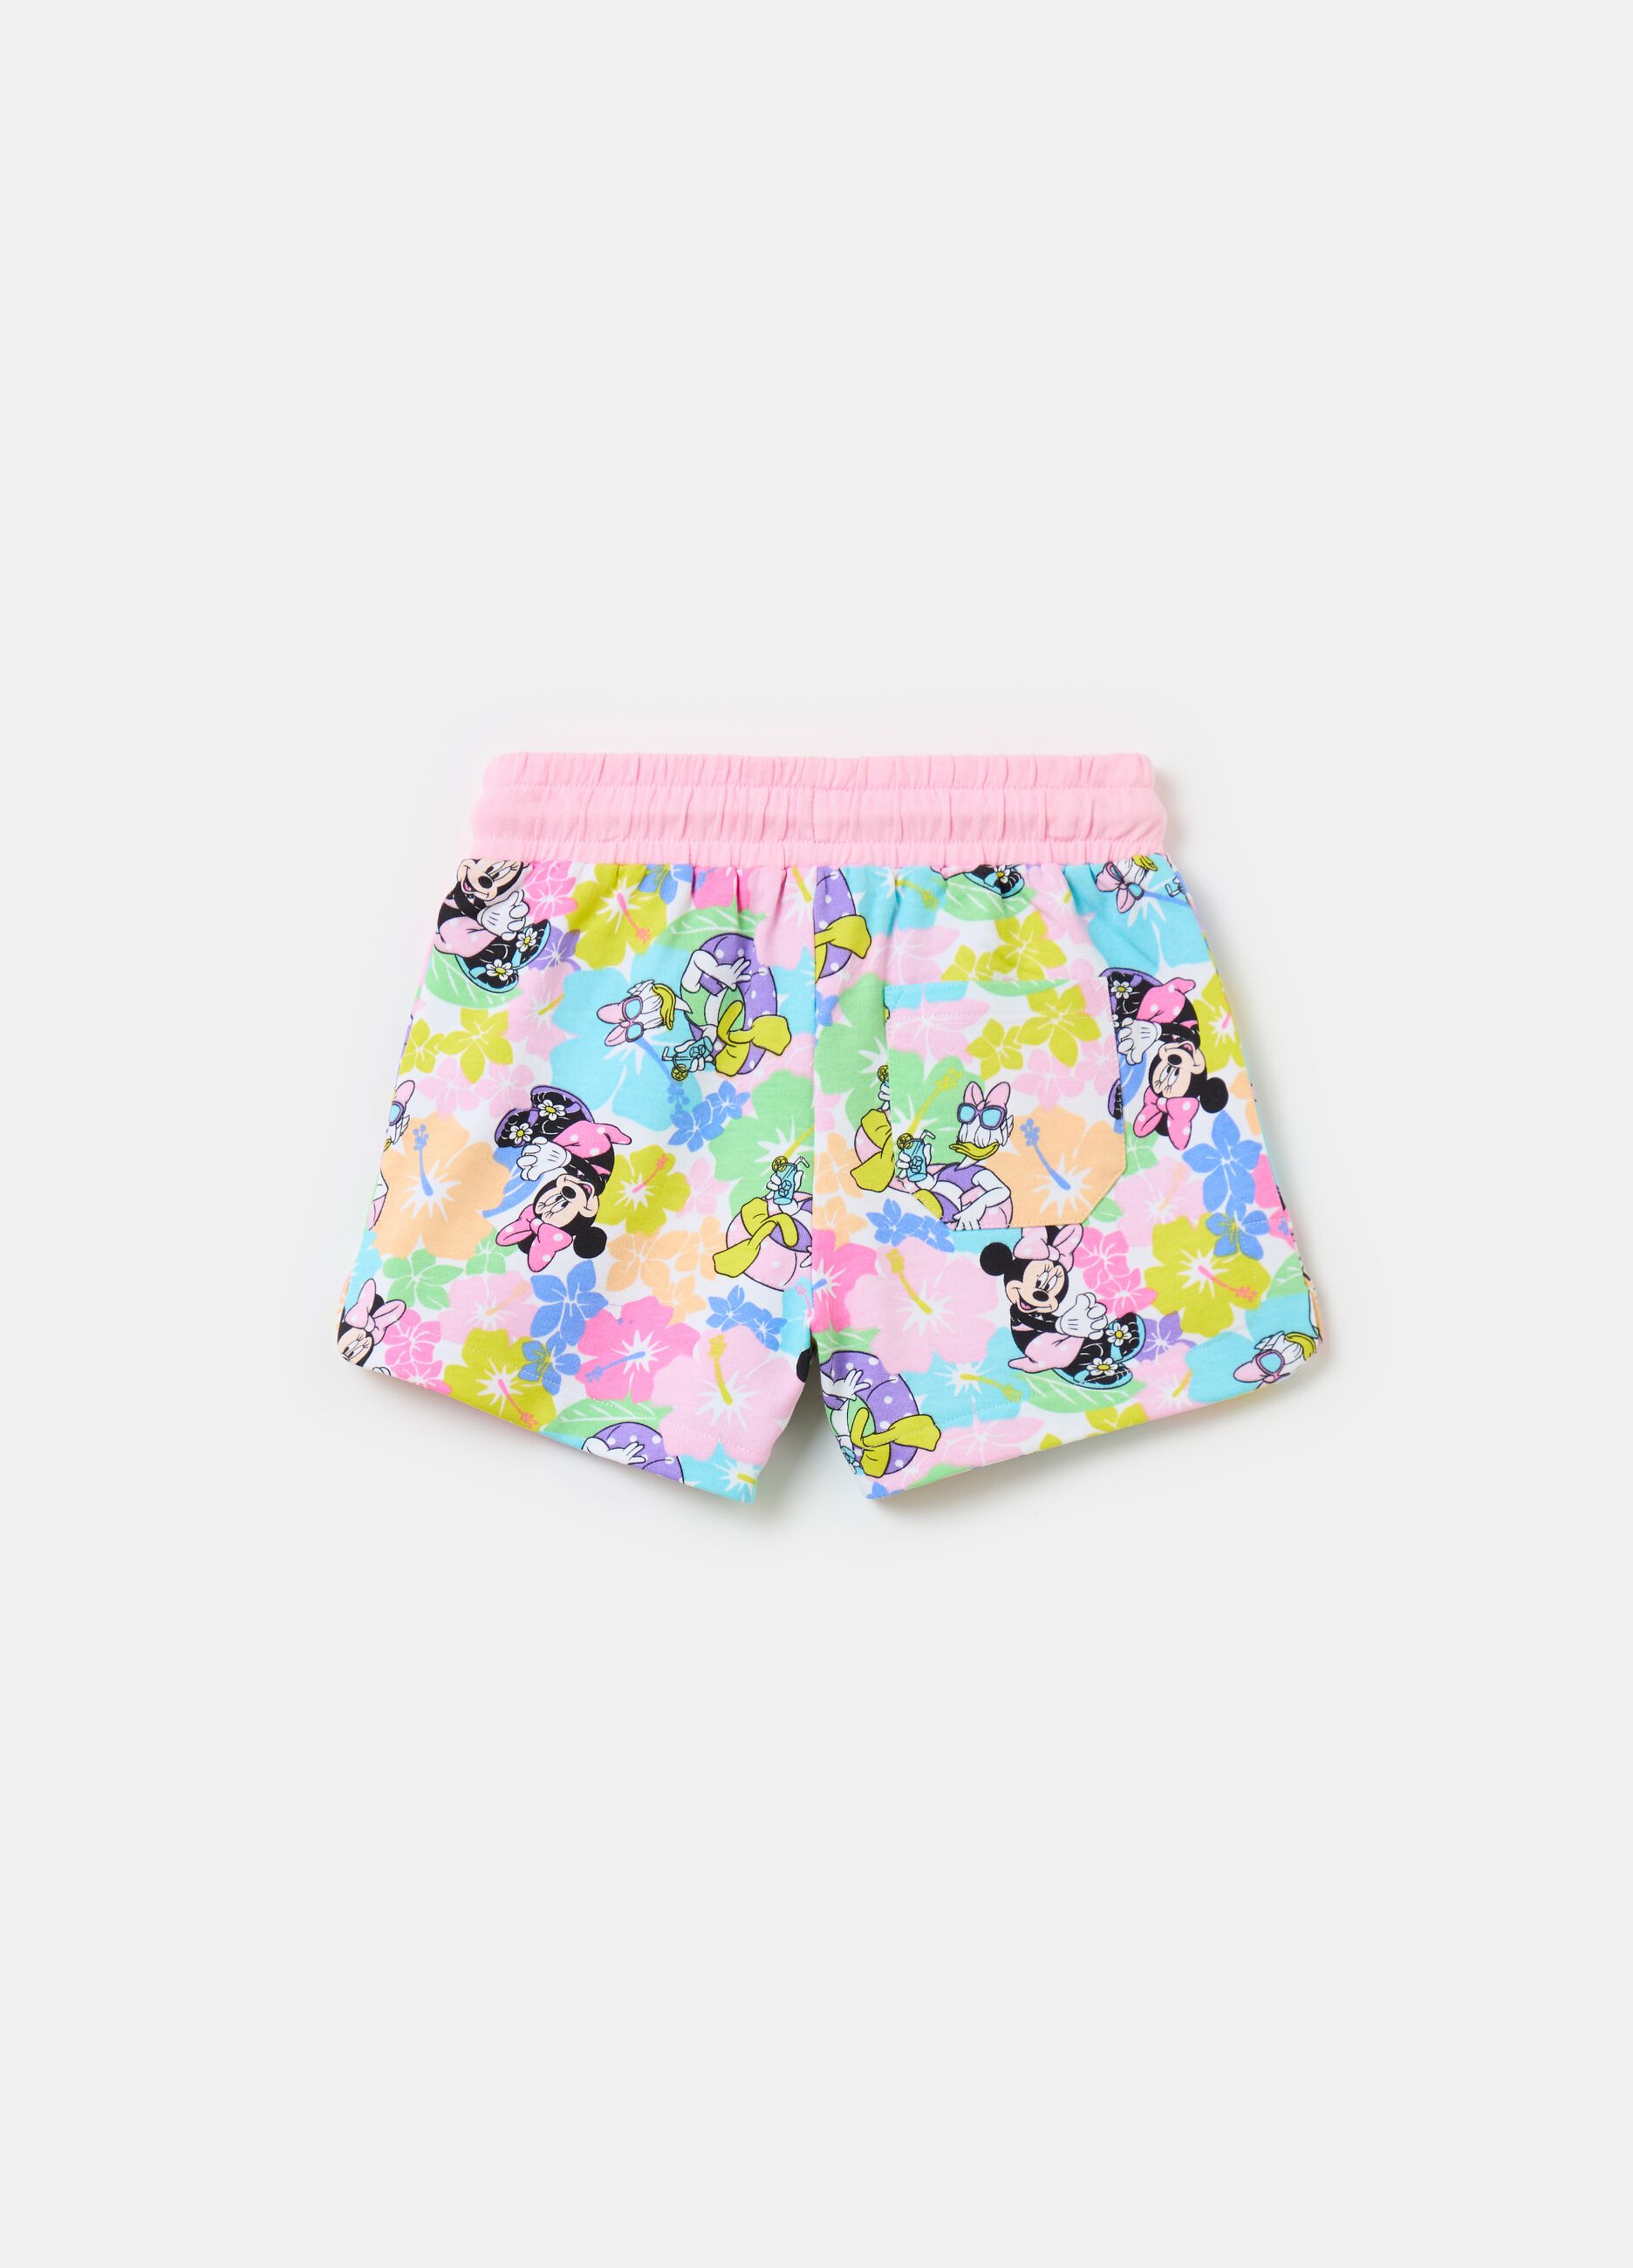 Shorts with Hawaiian Minnie Mouse and Daisy Duck print